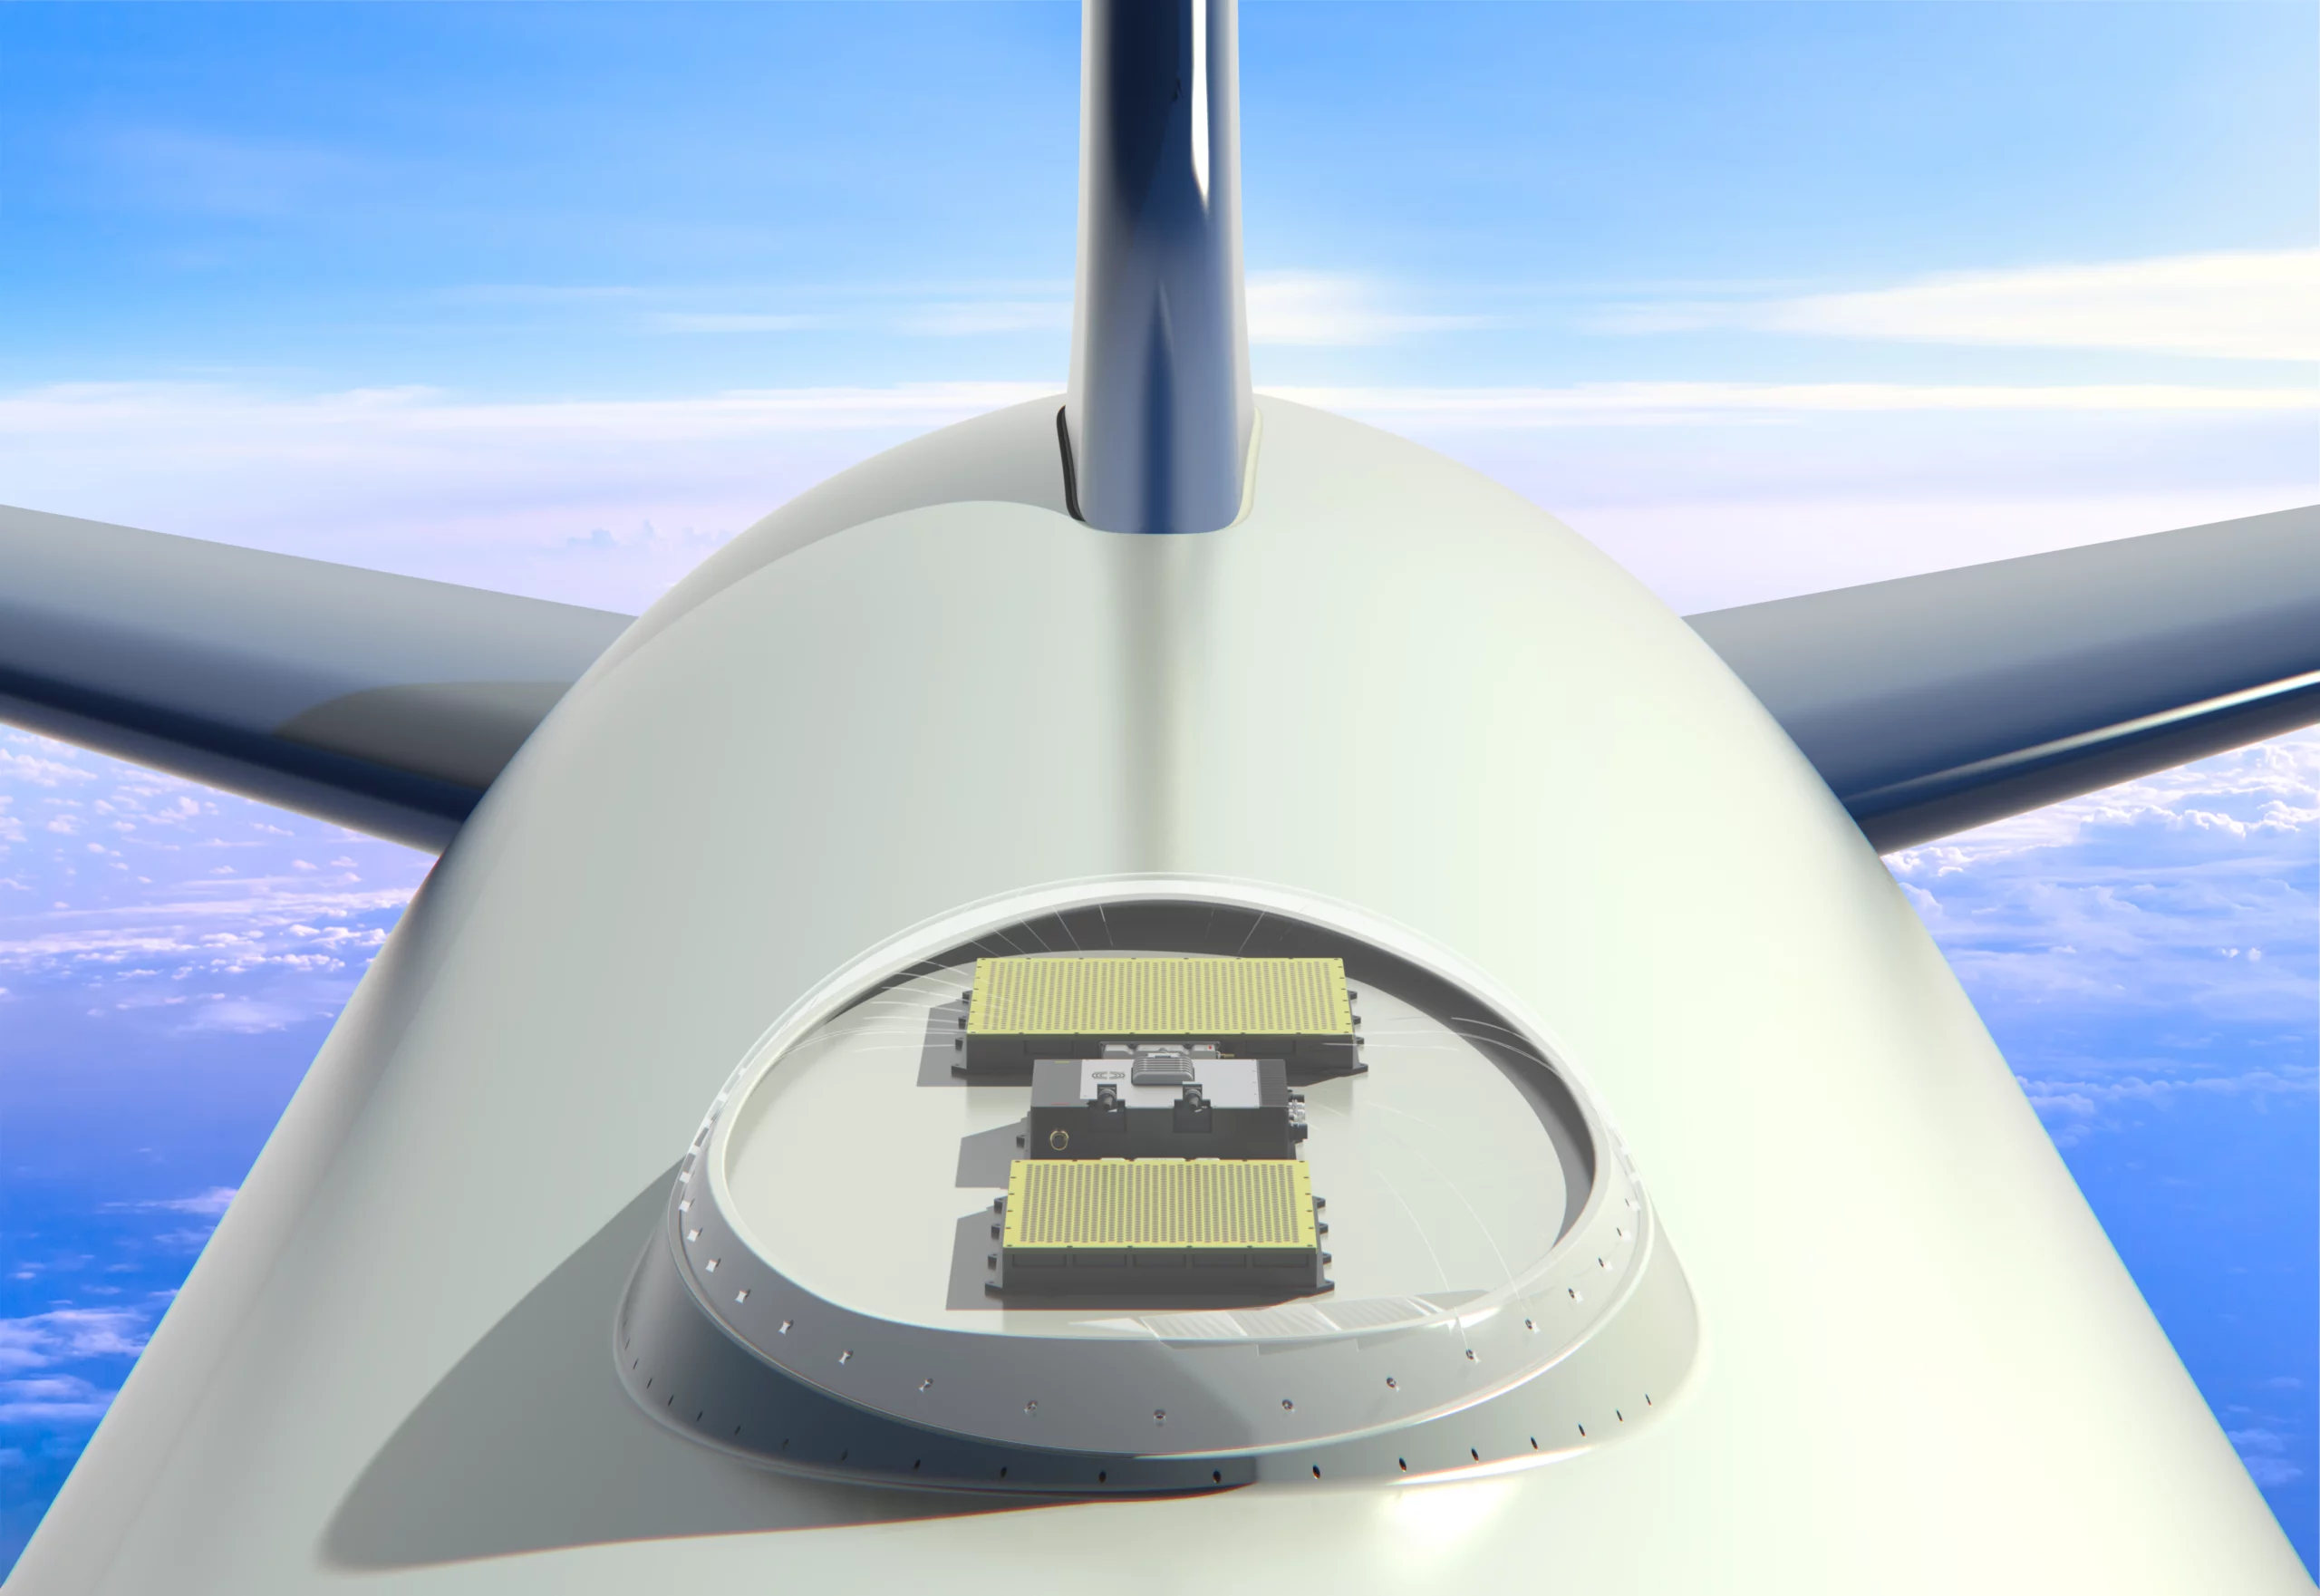 Airborne satcom antenna on airplane